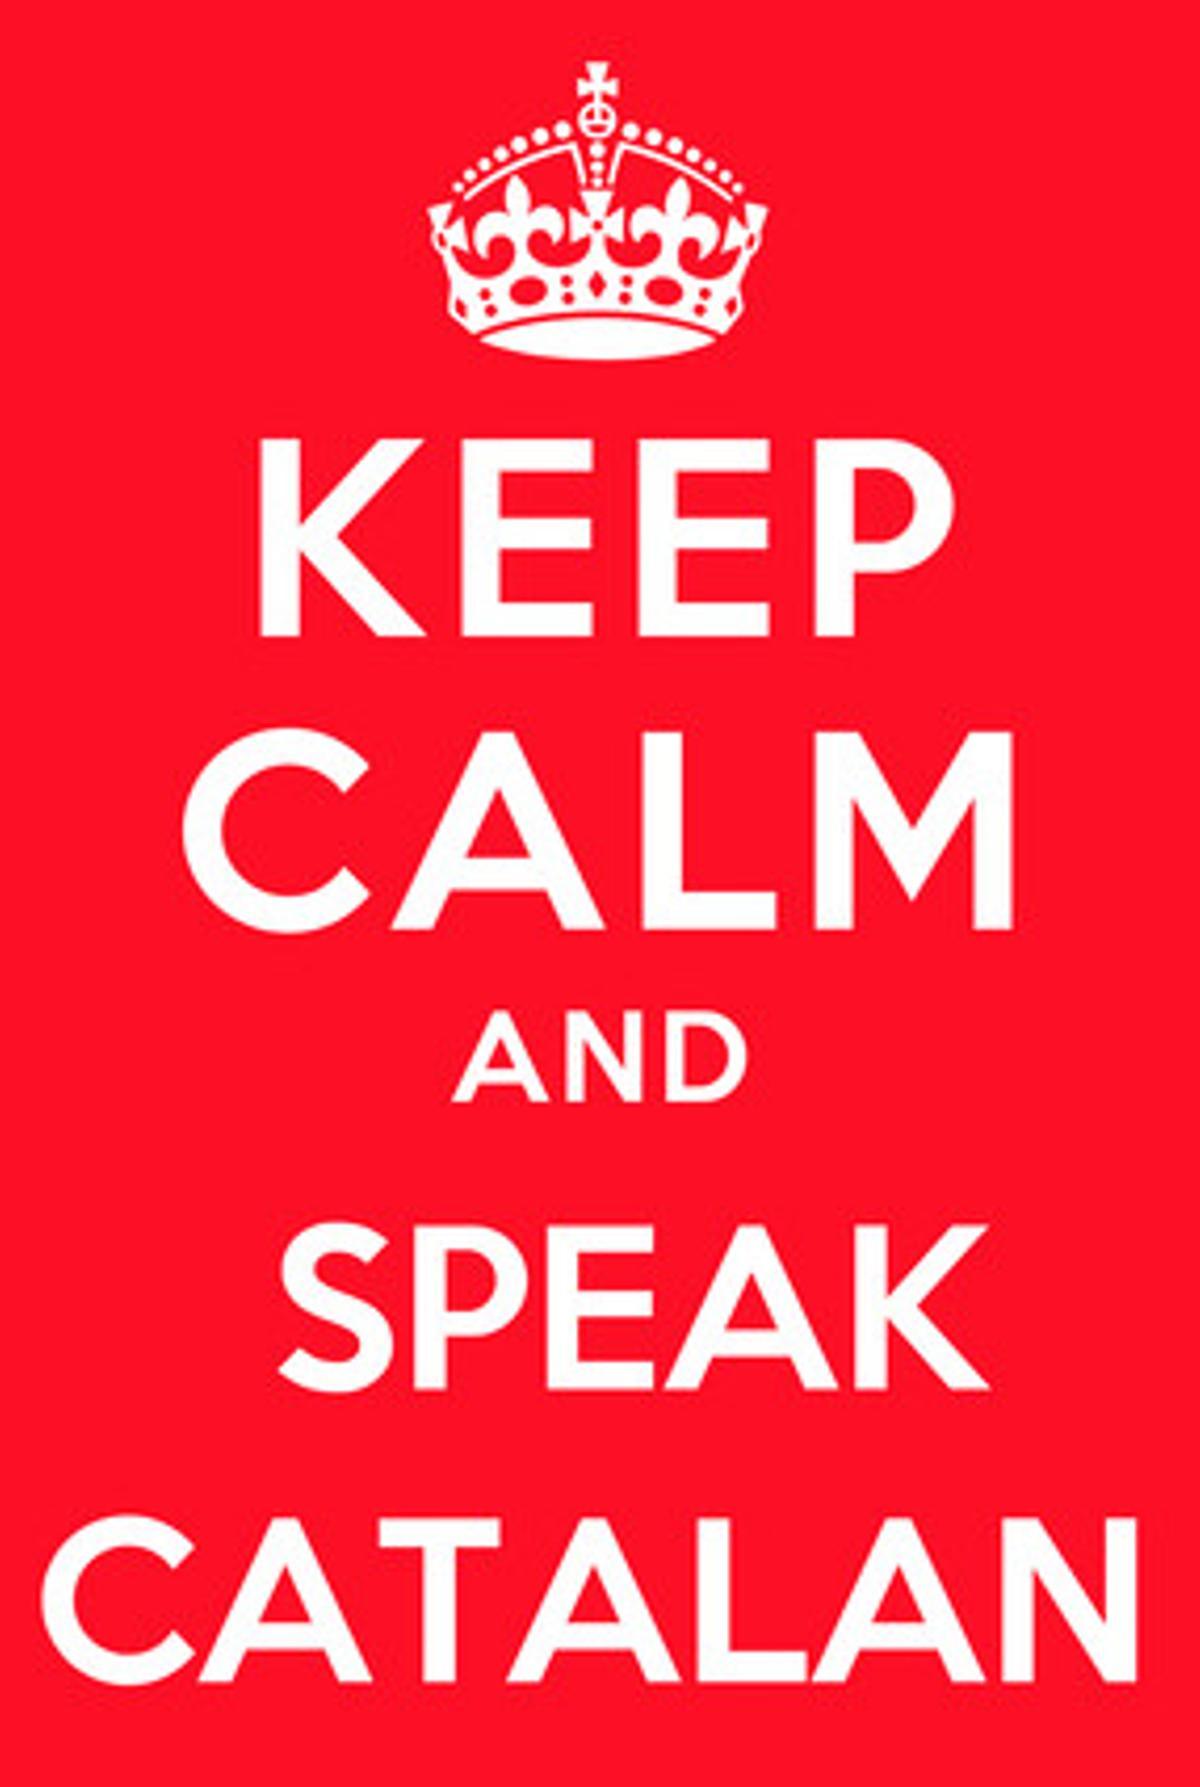 Imagen con el lema ’Keep calm and speak catalan’.